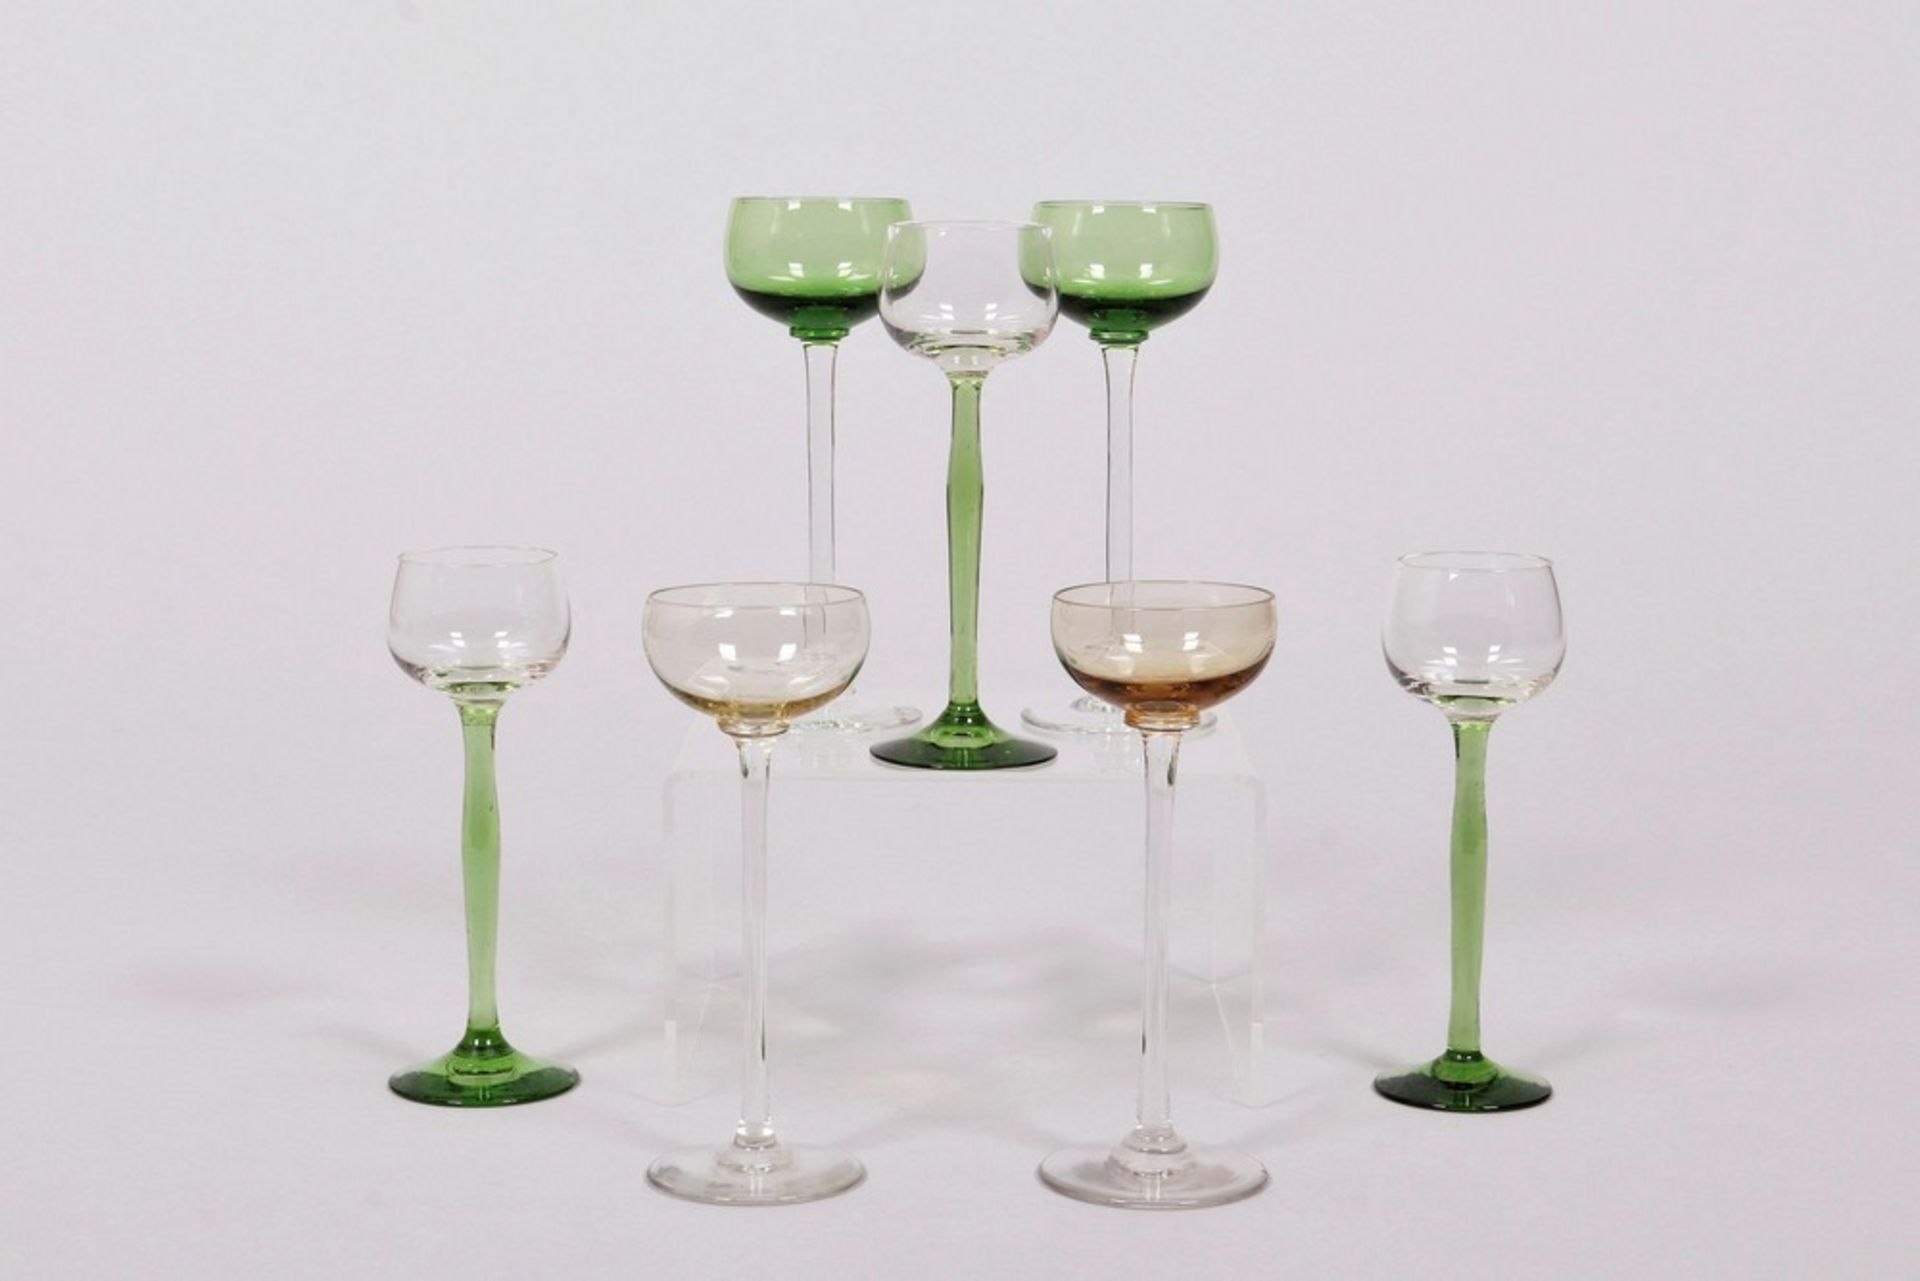 7 liqueur glasses, attributed to Koloman Moser (1868-1918), c. 1900